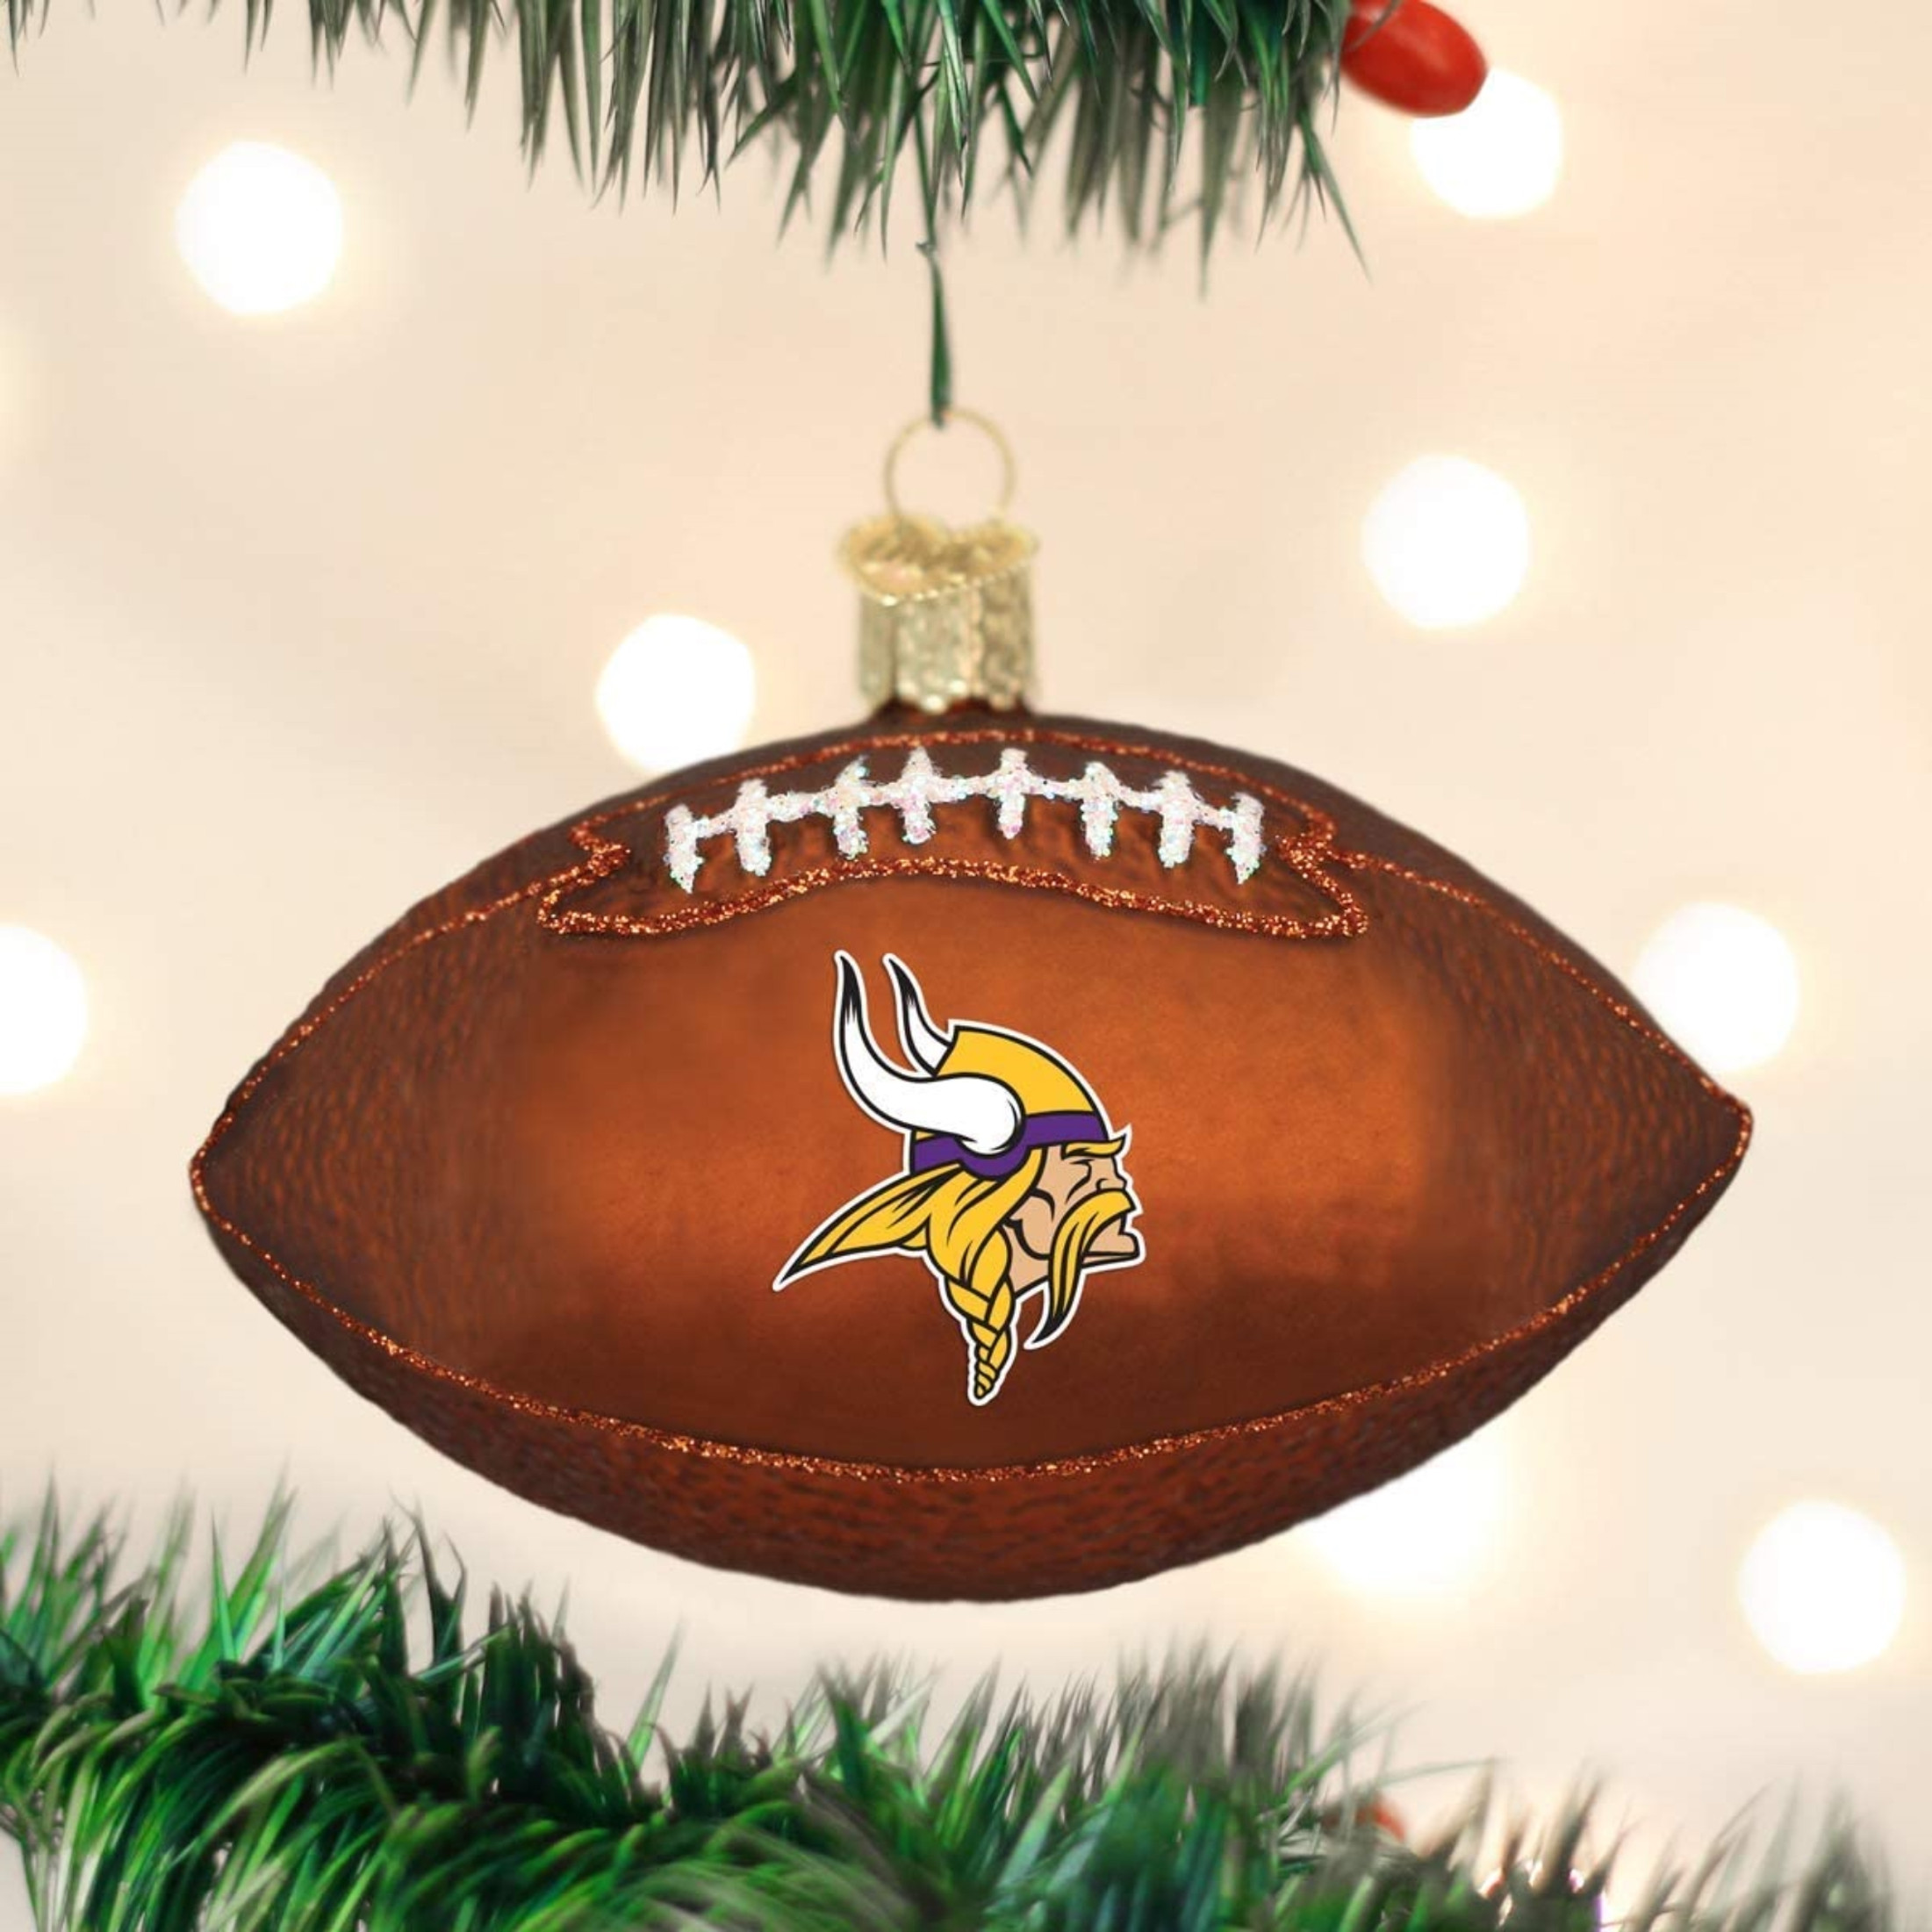 Old World Christmas Glass Blown Ornament For Christmas Tree, Minnesota Vikings Football (With OWC Gift Box)